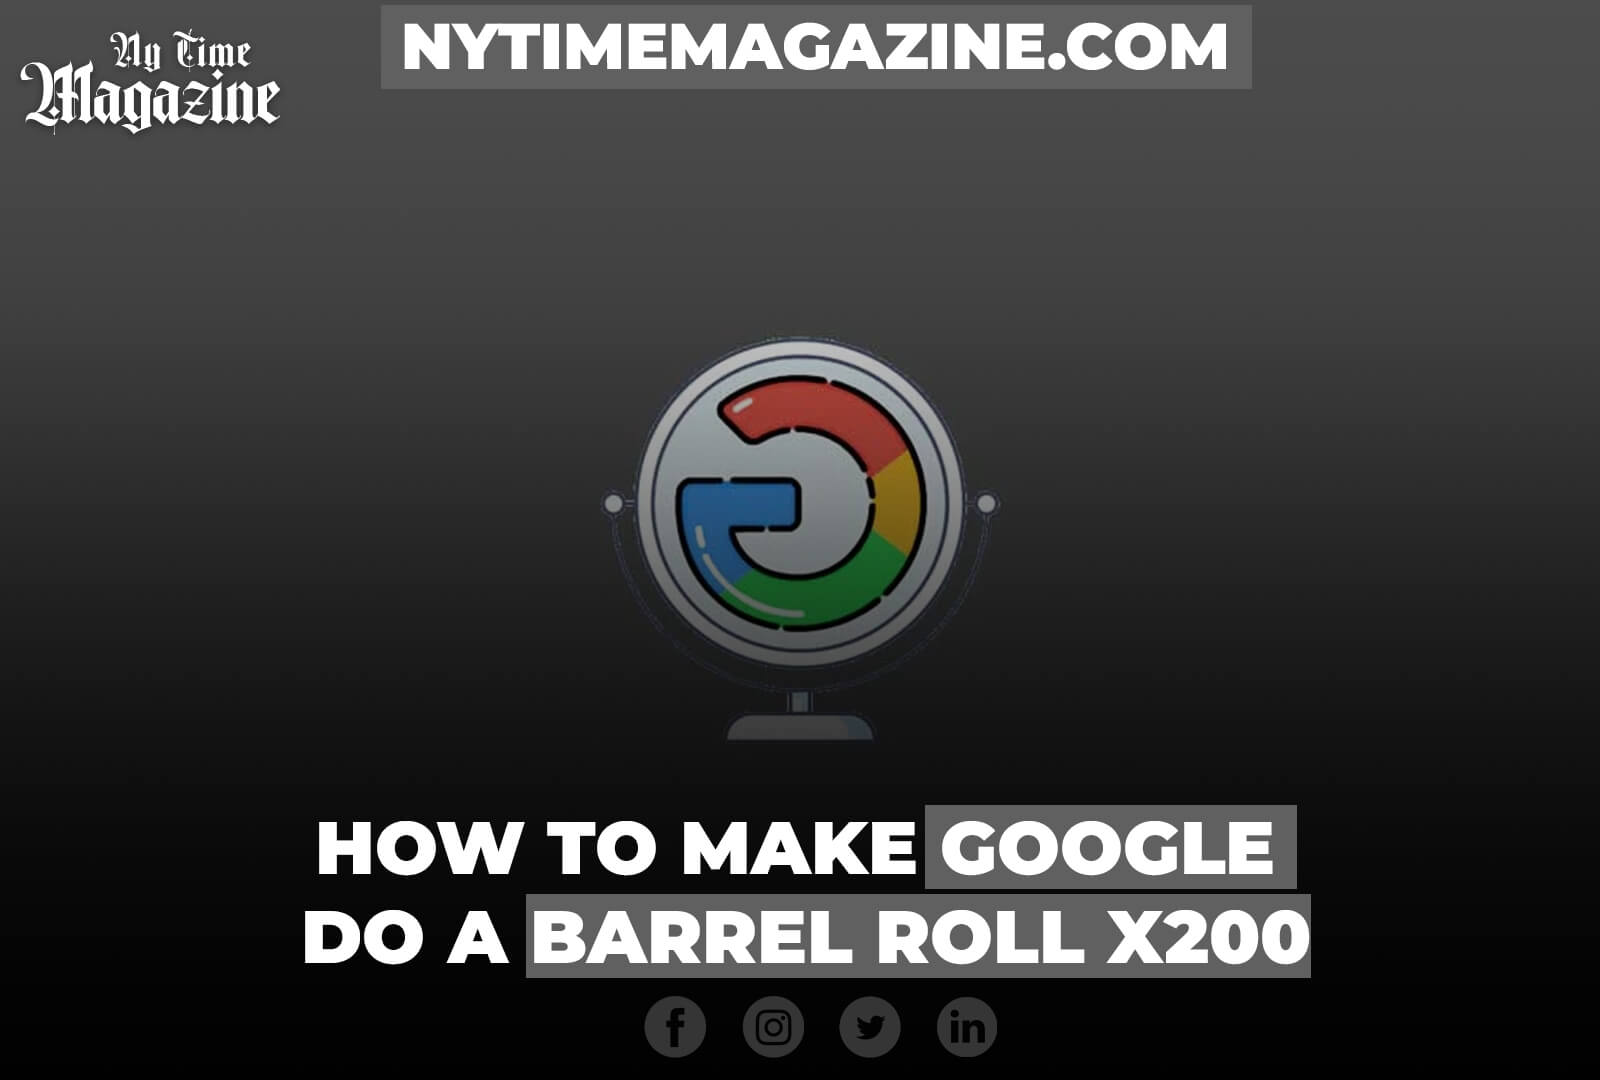 HOW TO MAKE GOOGLE DO A BARREL ROLL X200